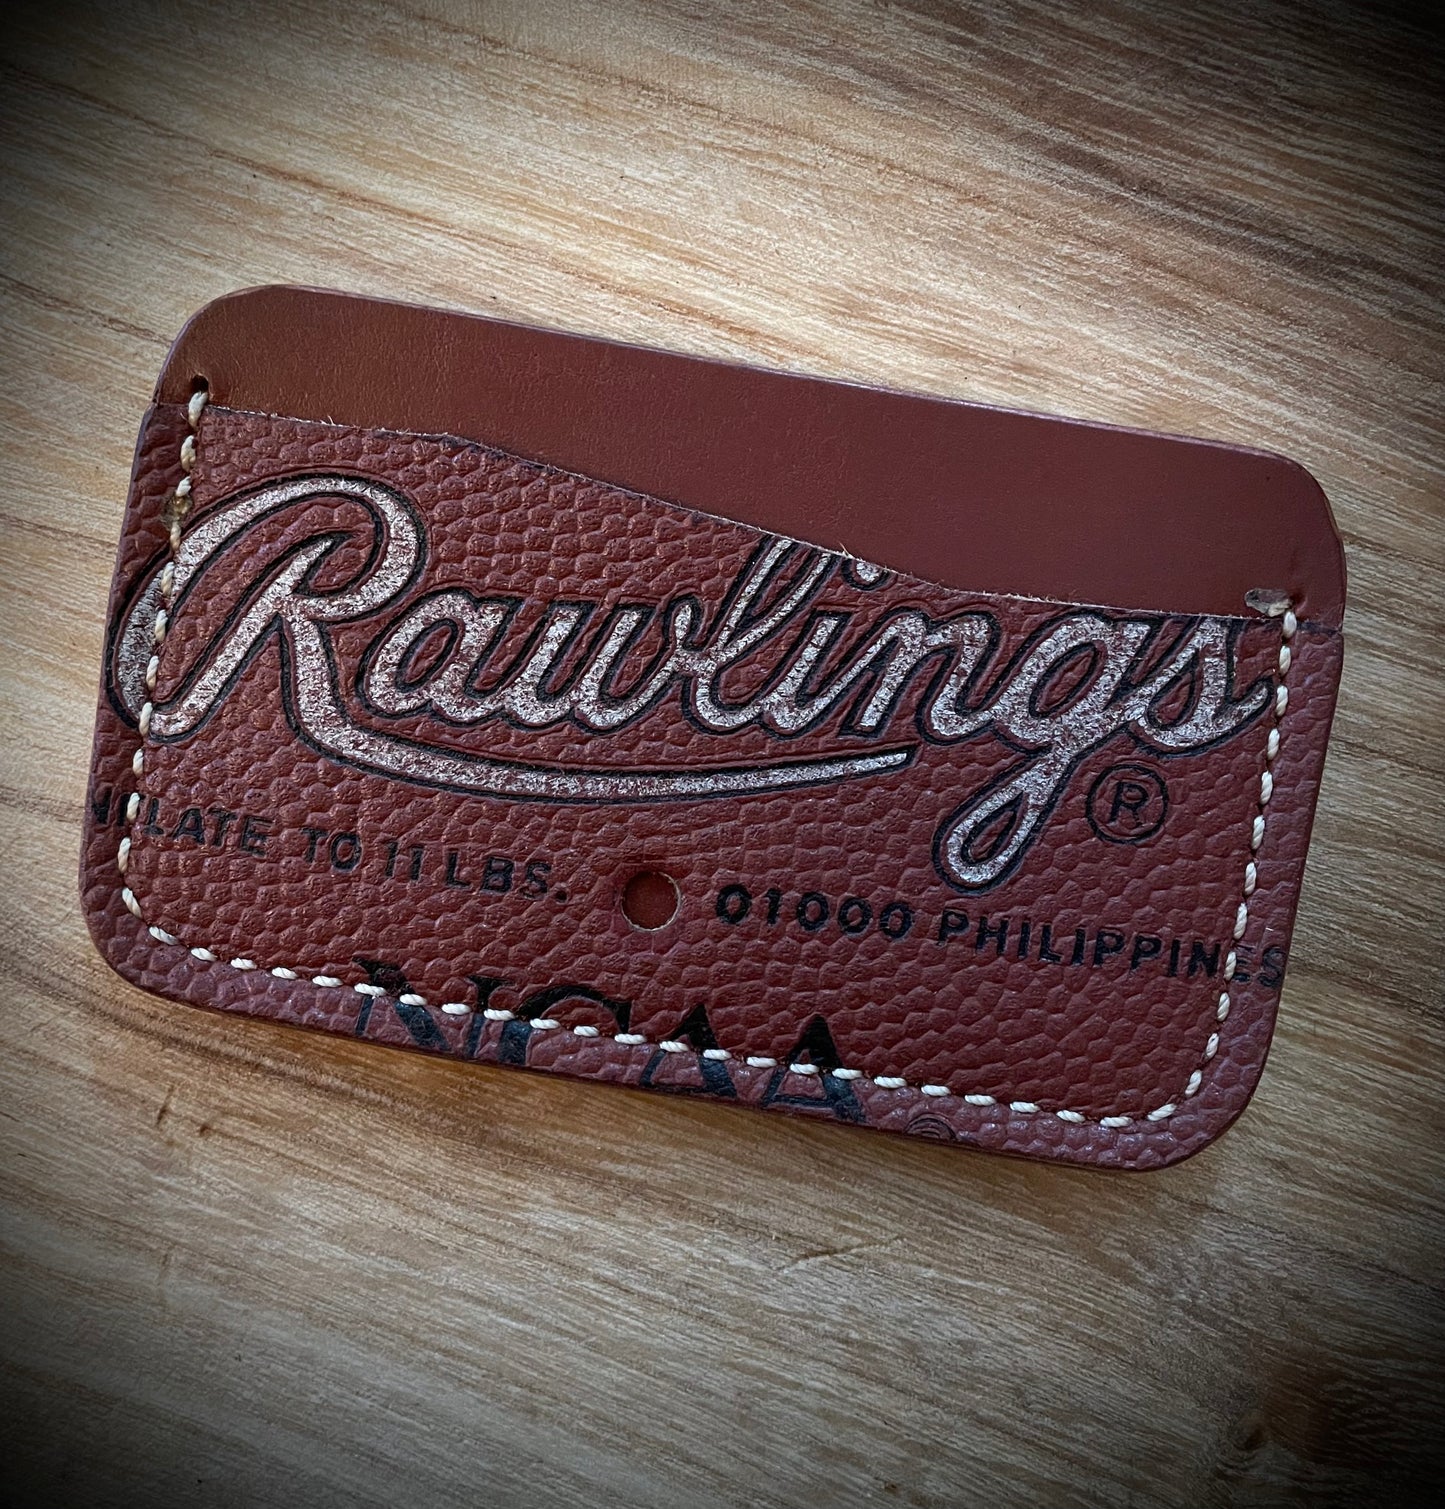 The Rudy-Rawlings 01000